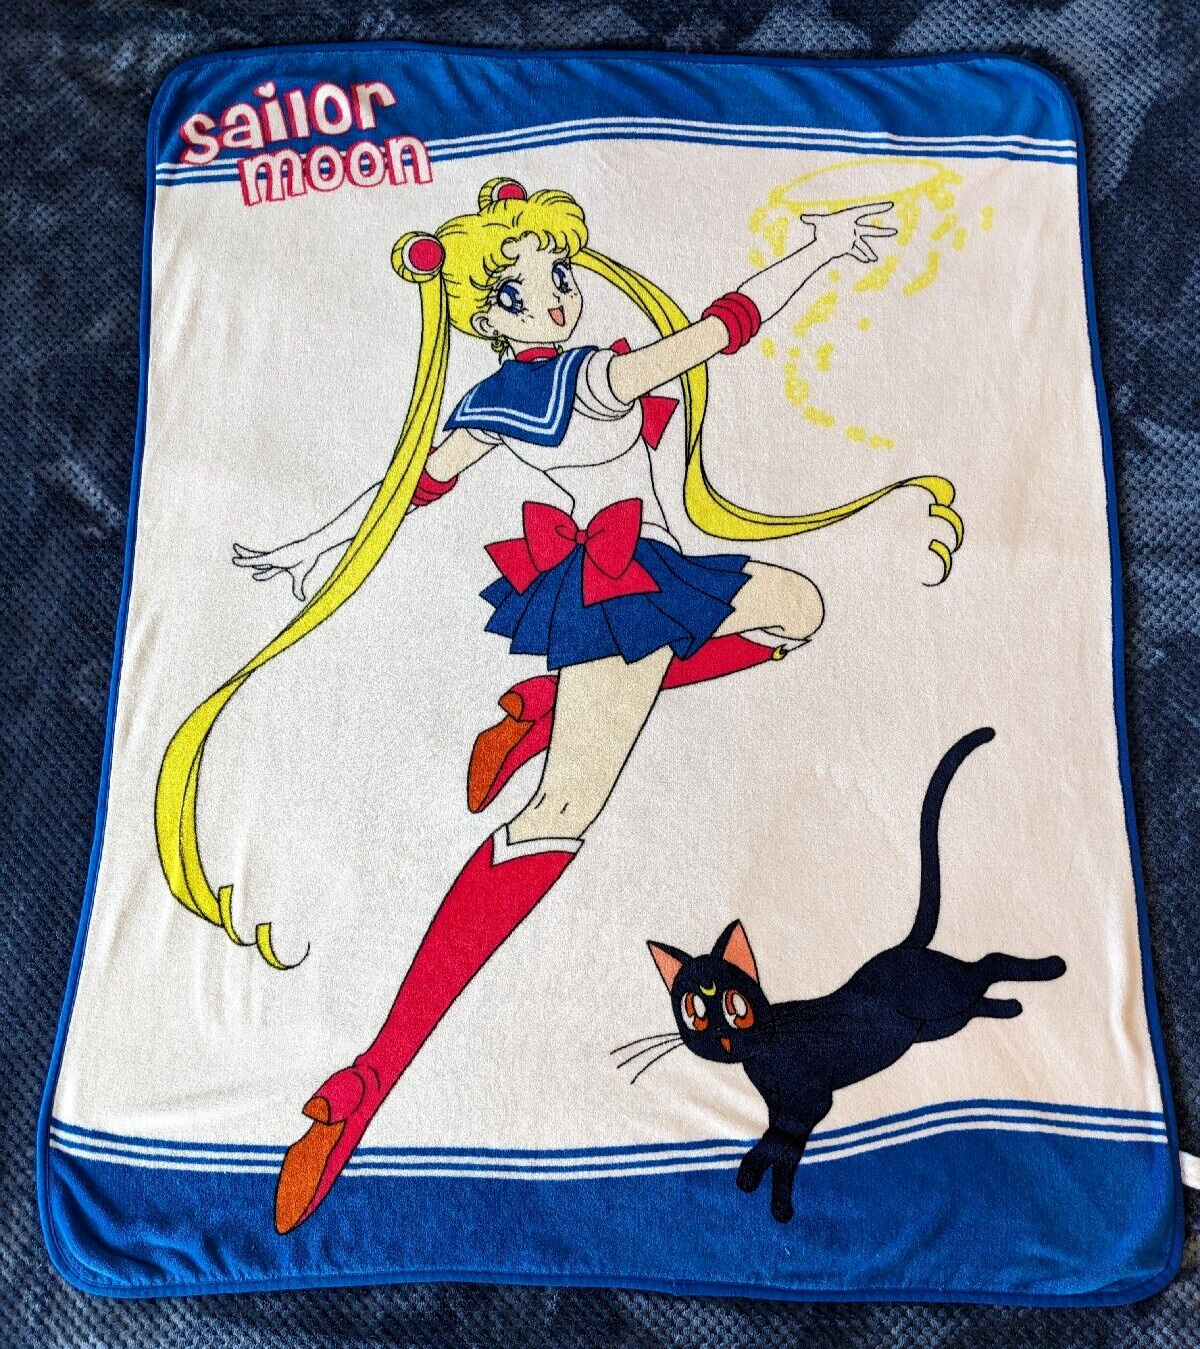 Vintage Anime Sailor Moon Throw Size Blanket 4 ft x 5 ft Soft Fleece w Black Cat